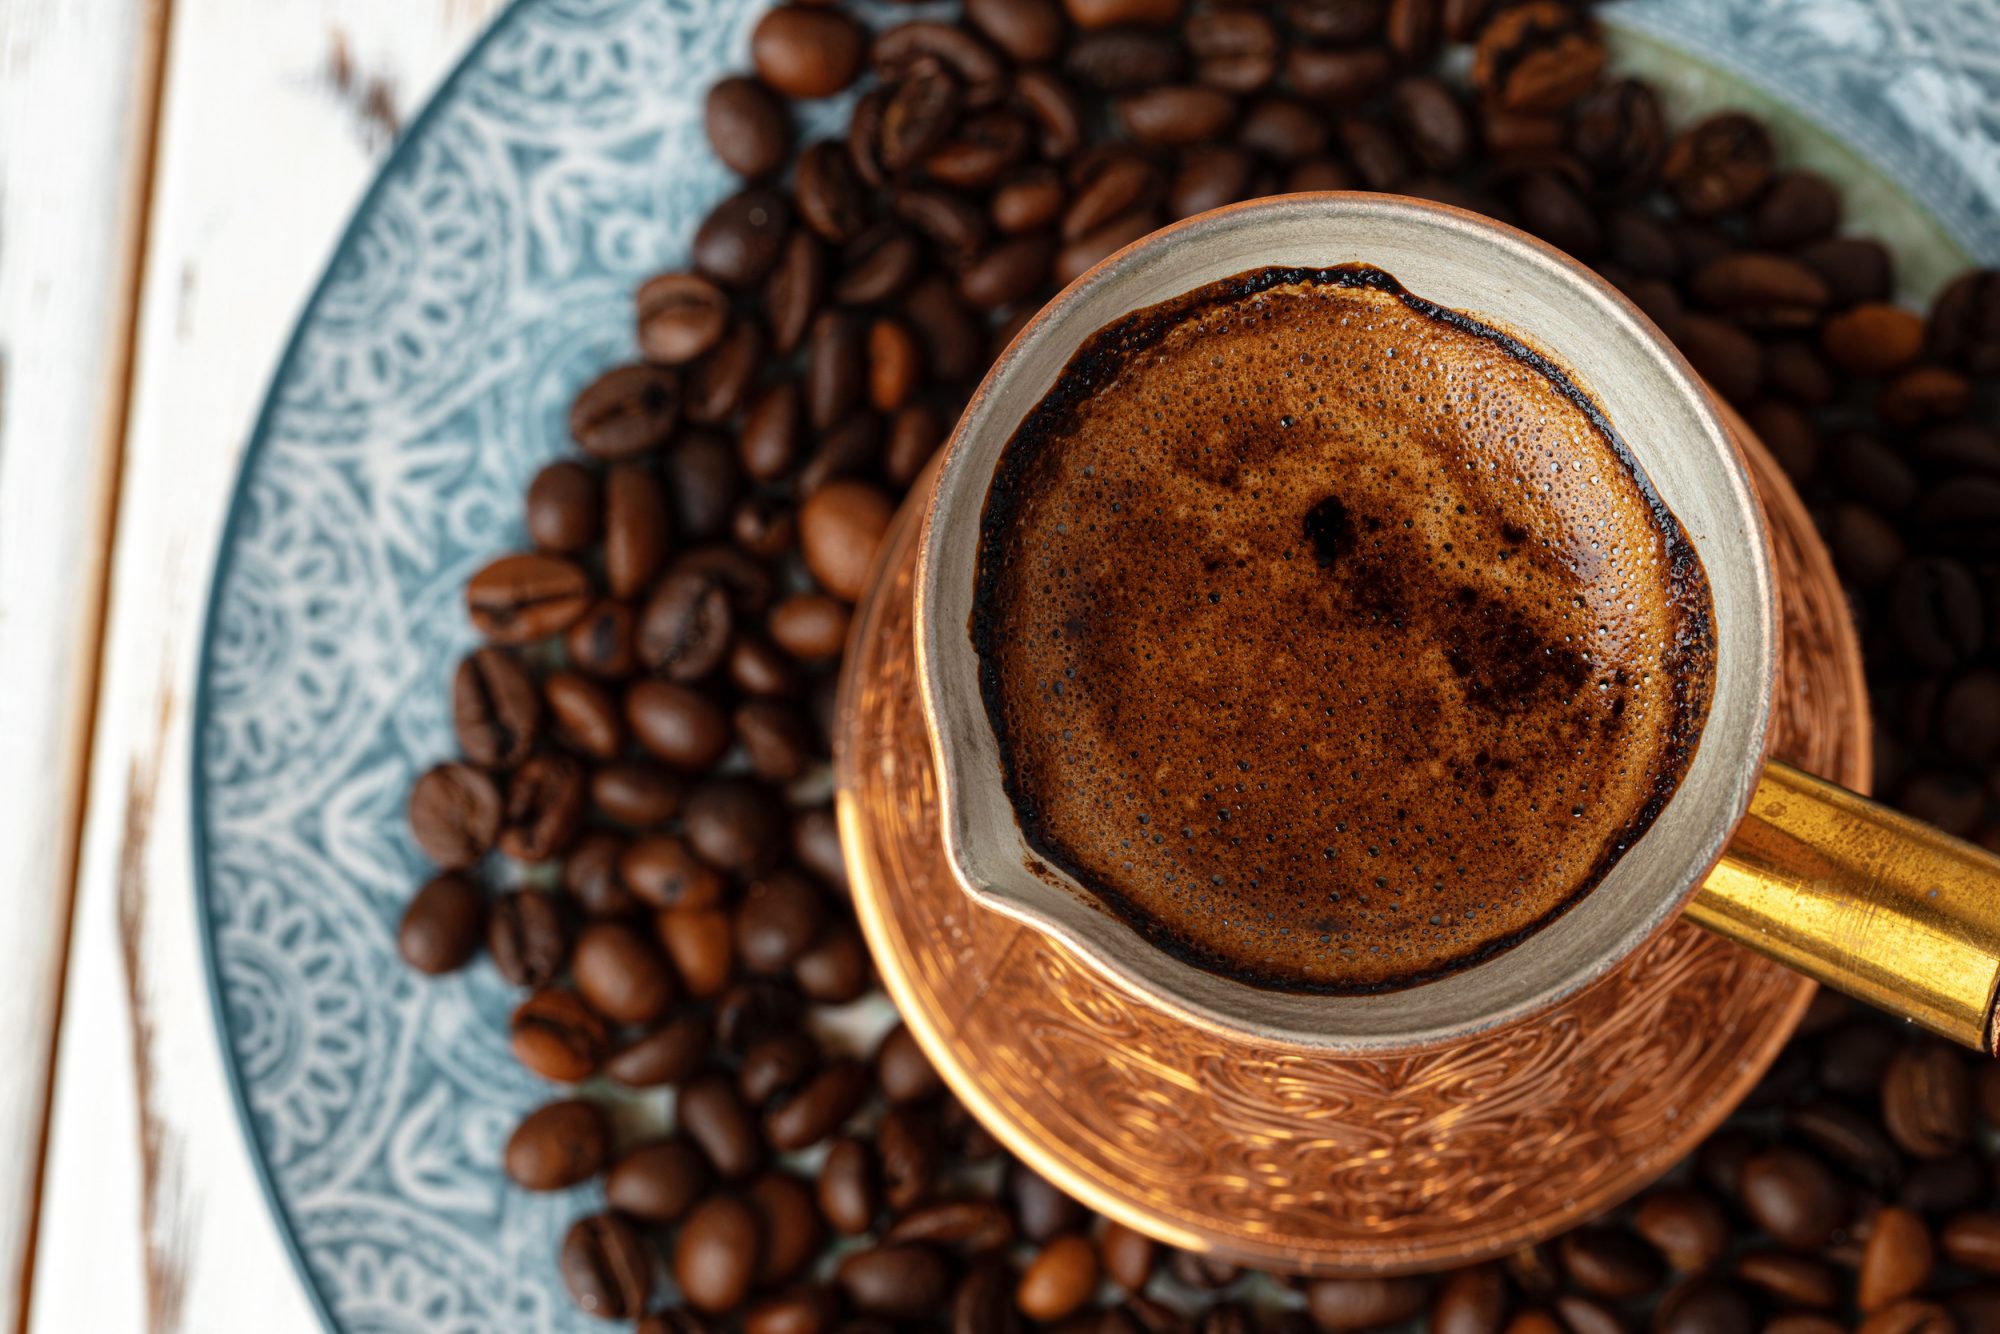 Drinking coffee reduces risk of contracting coronavirus: Study